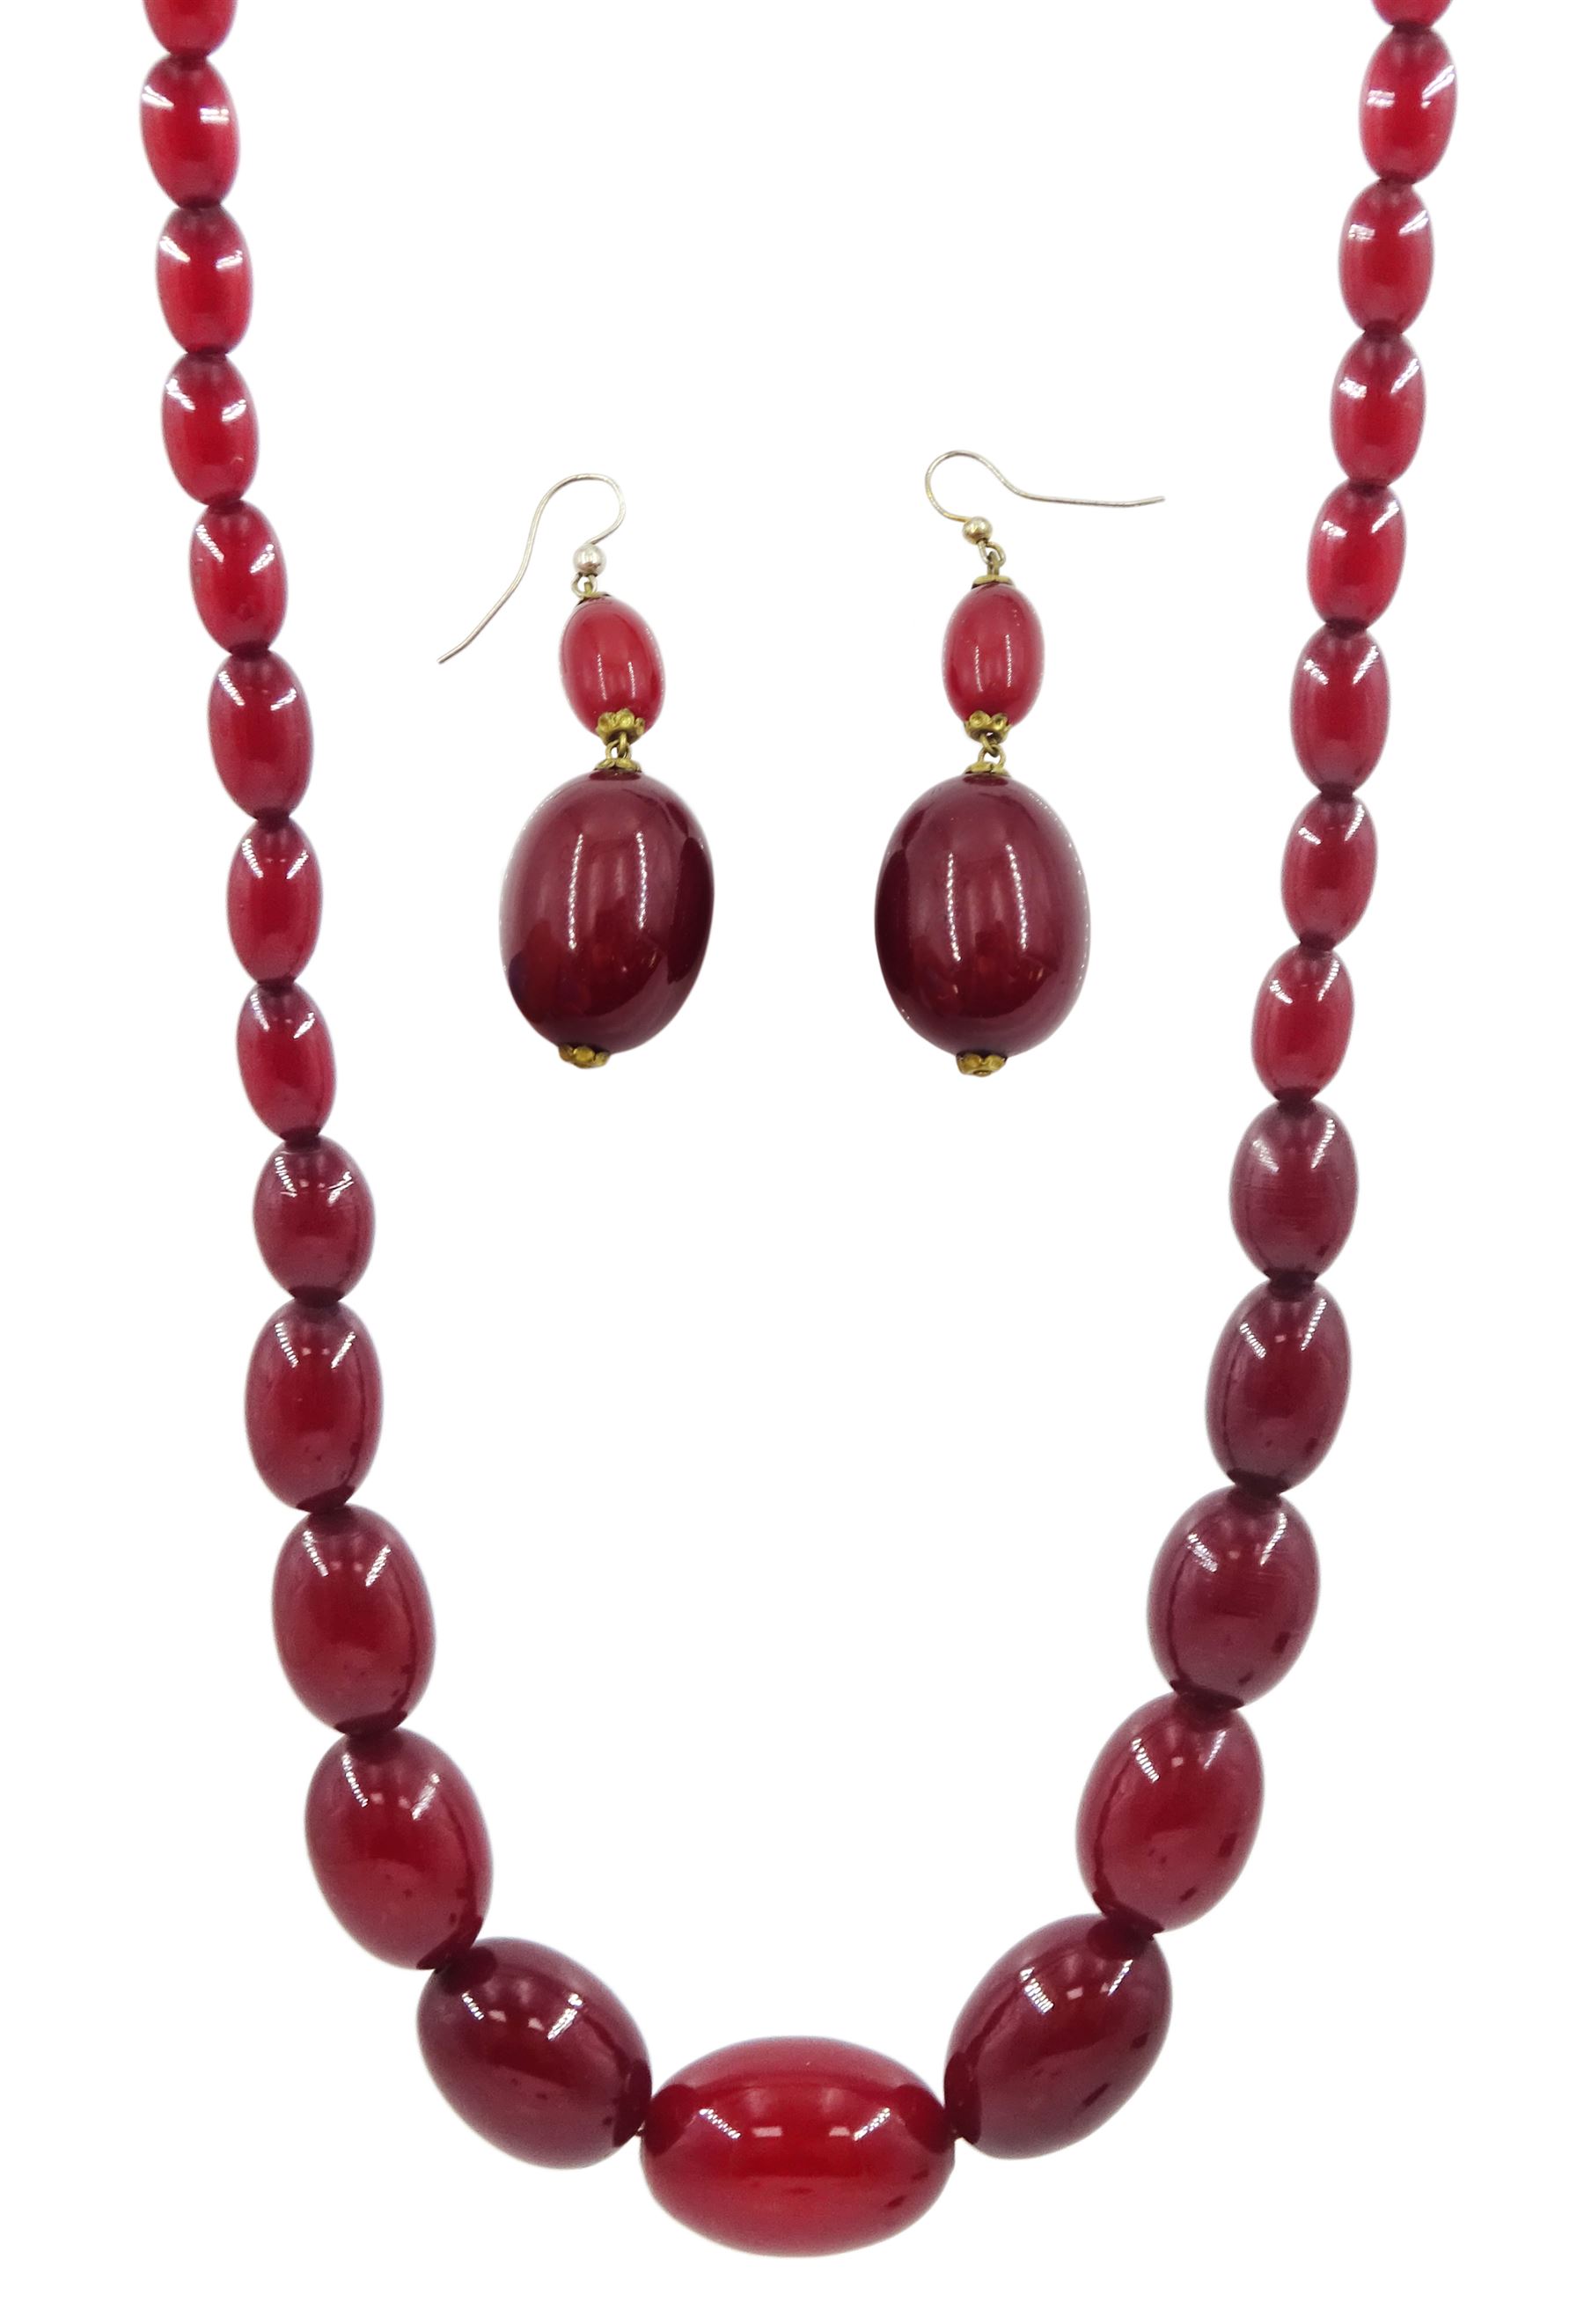 Single strand cherry amber bead necklace